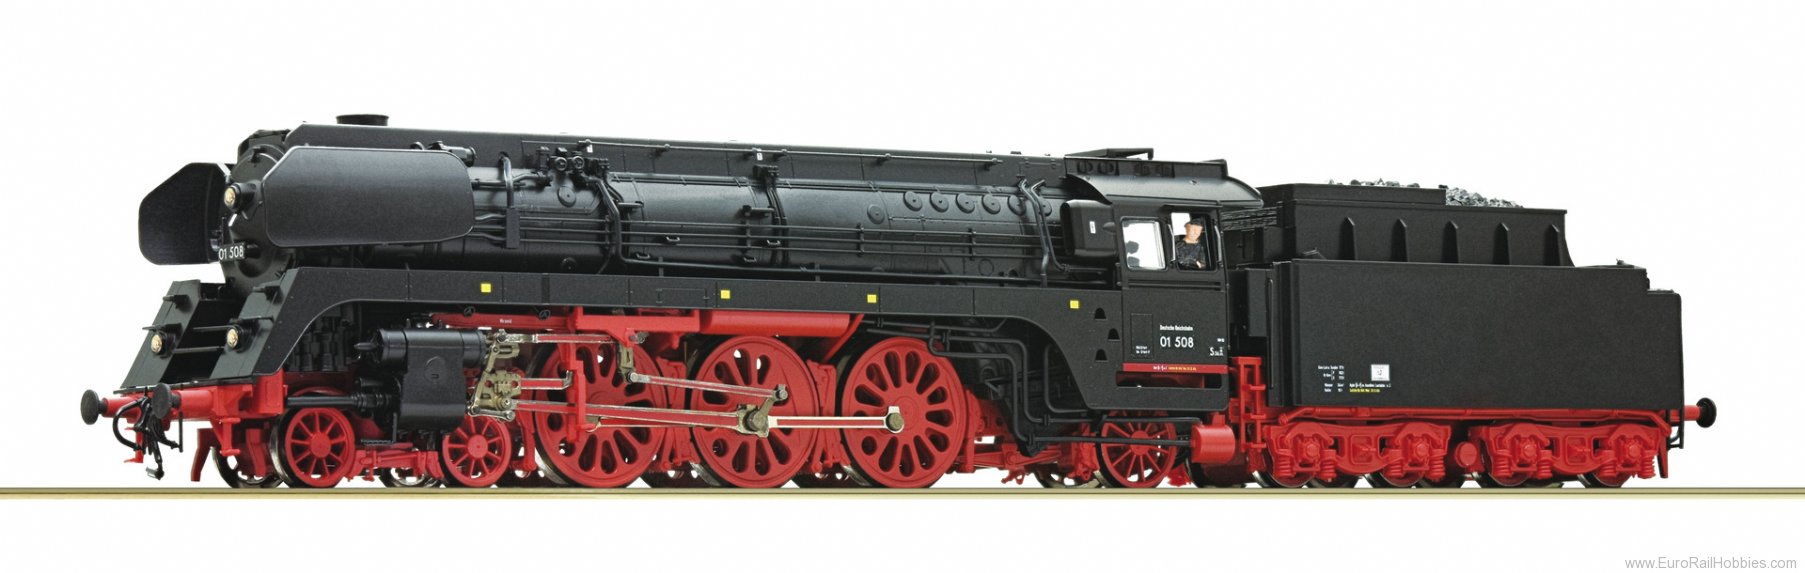 Roco 79268 Steam locomotive 01 508, DR (AC Digital Sound